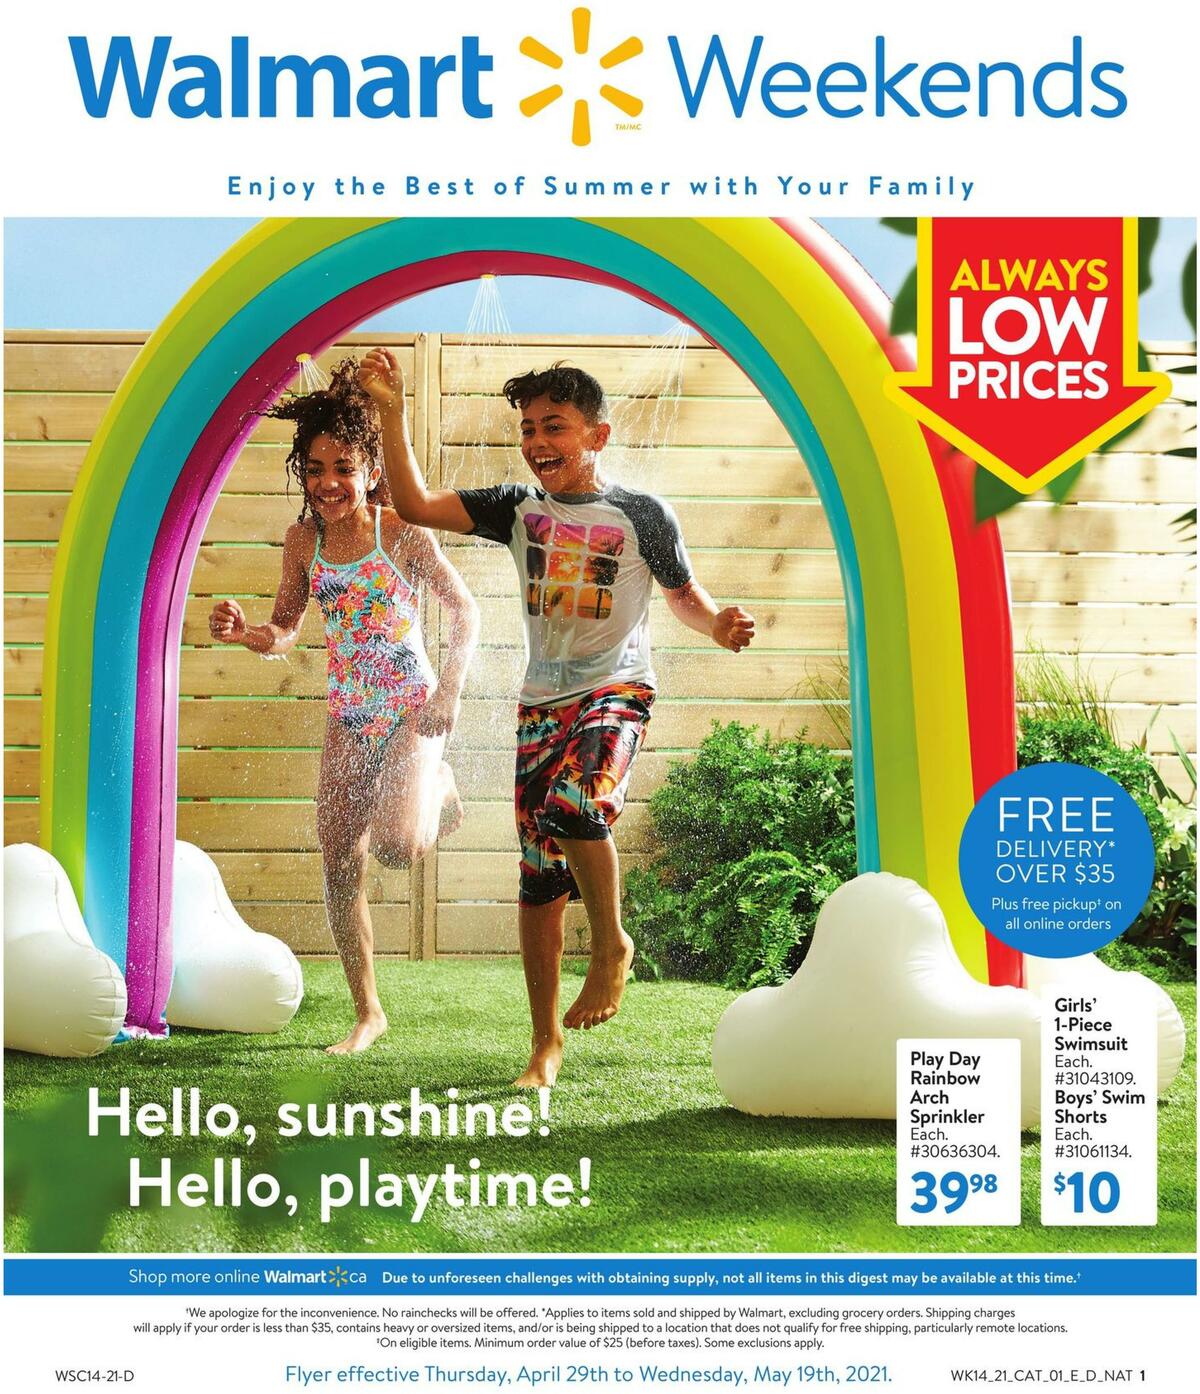 Walmart Weekends Flyer from April 29